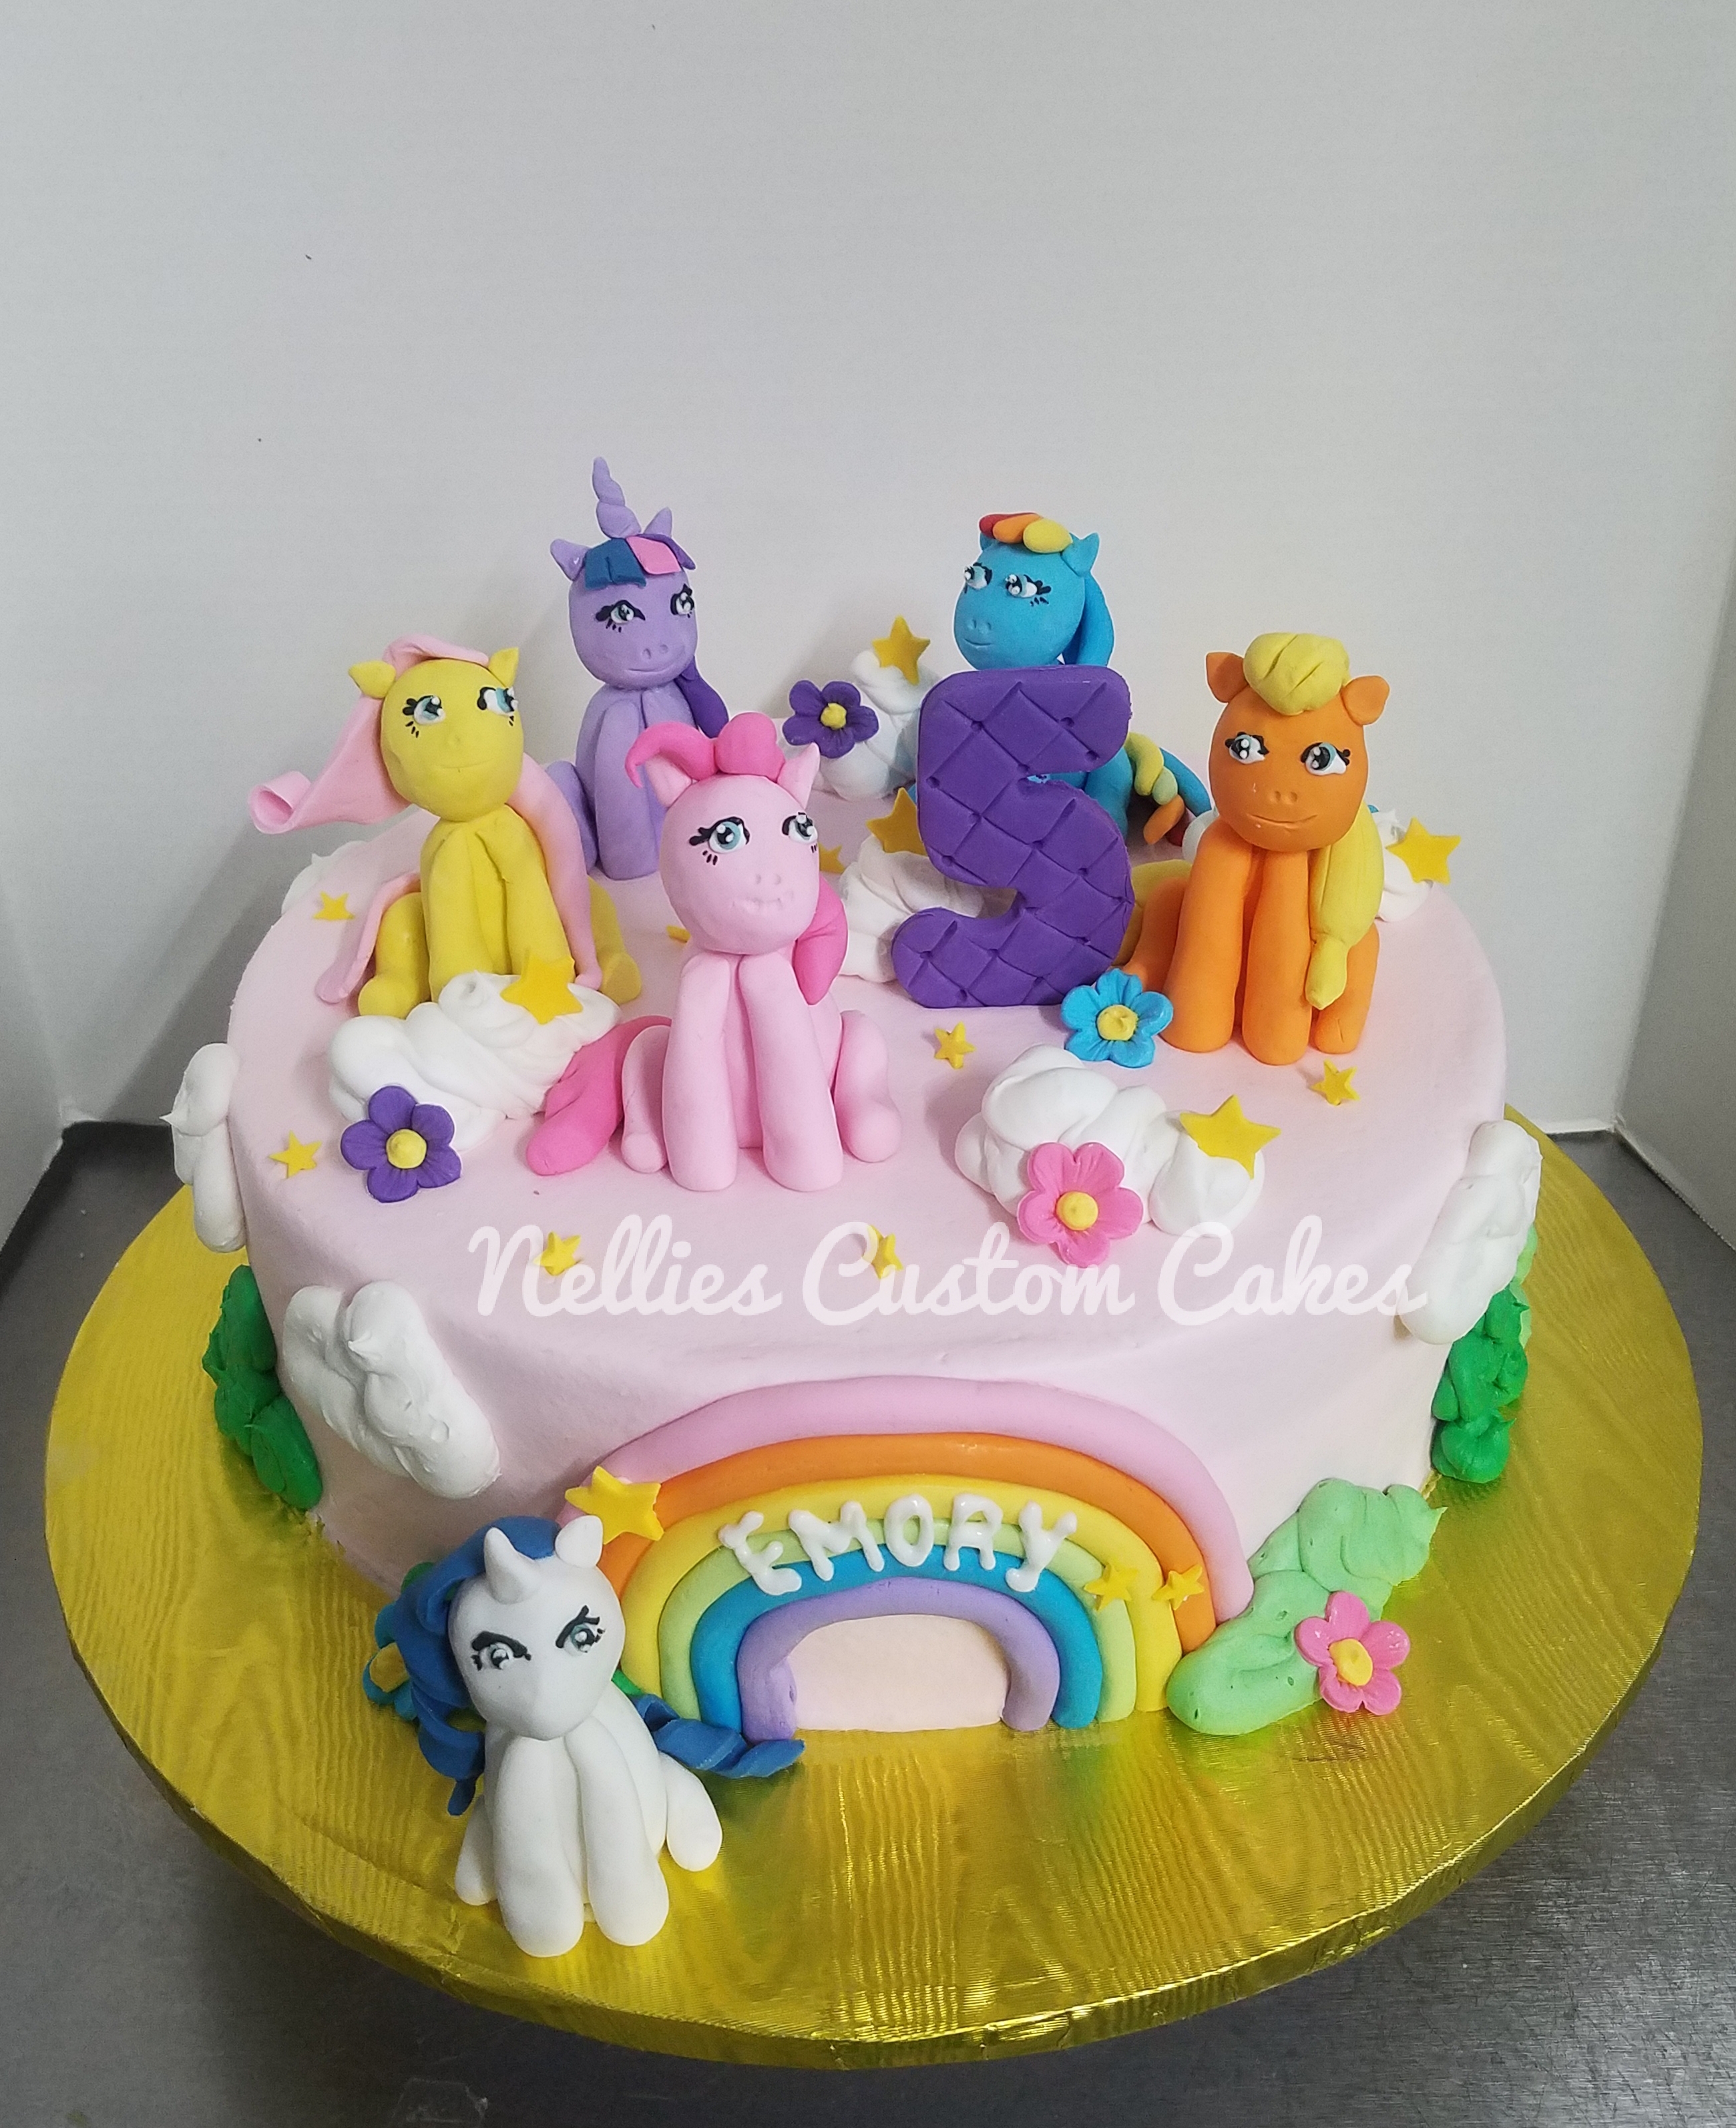 Rainbow pony cake - Nellie's Custom Cakes, Kansas City